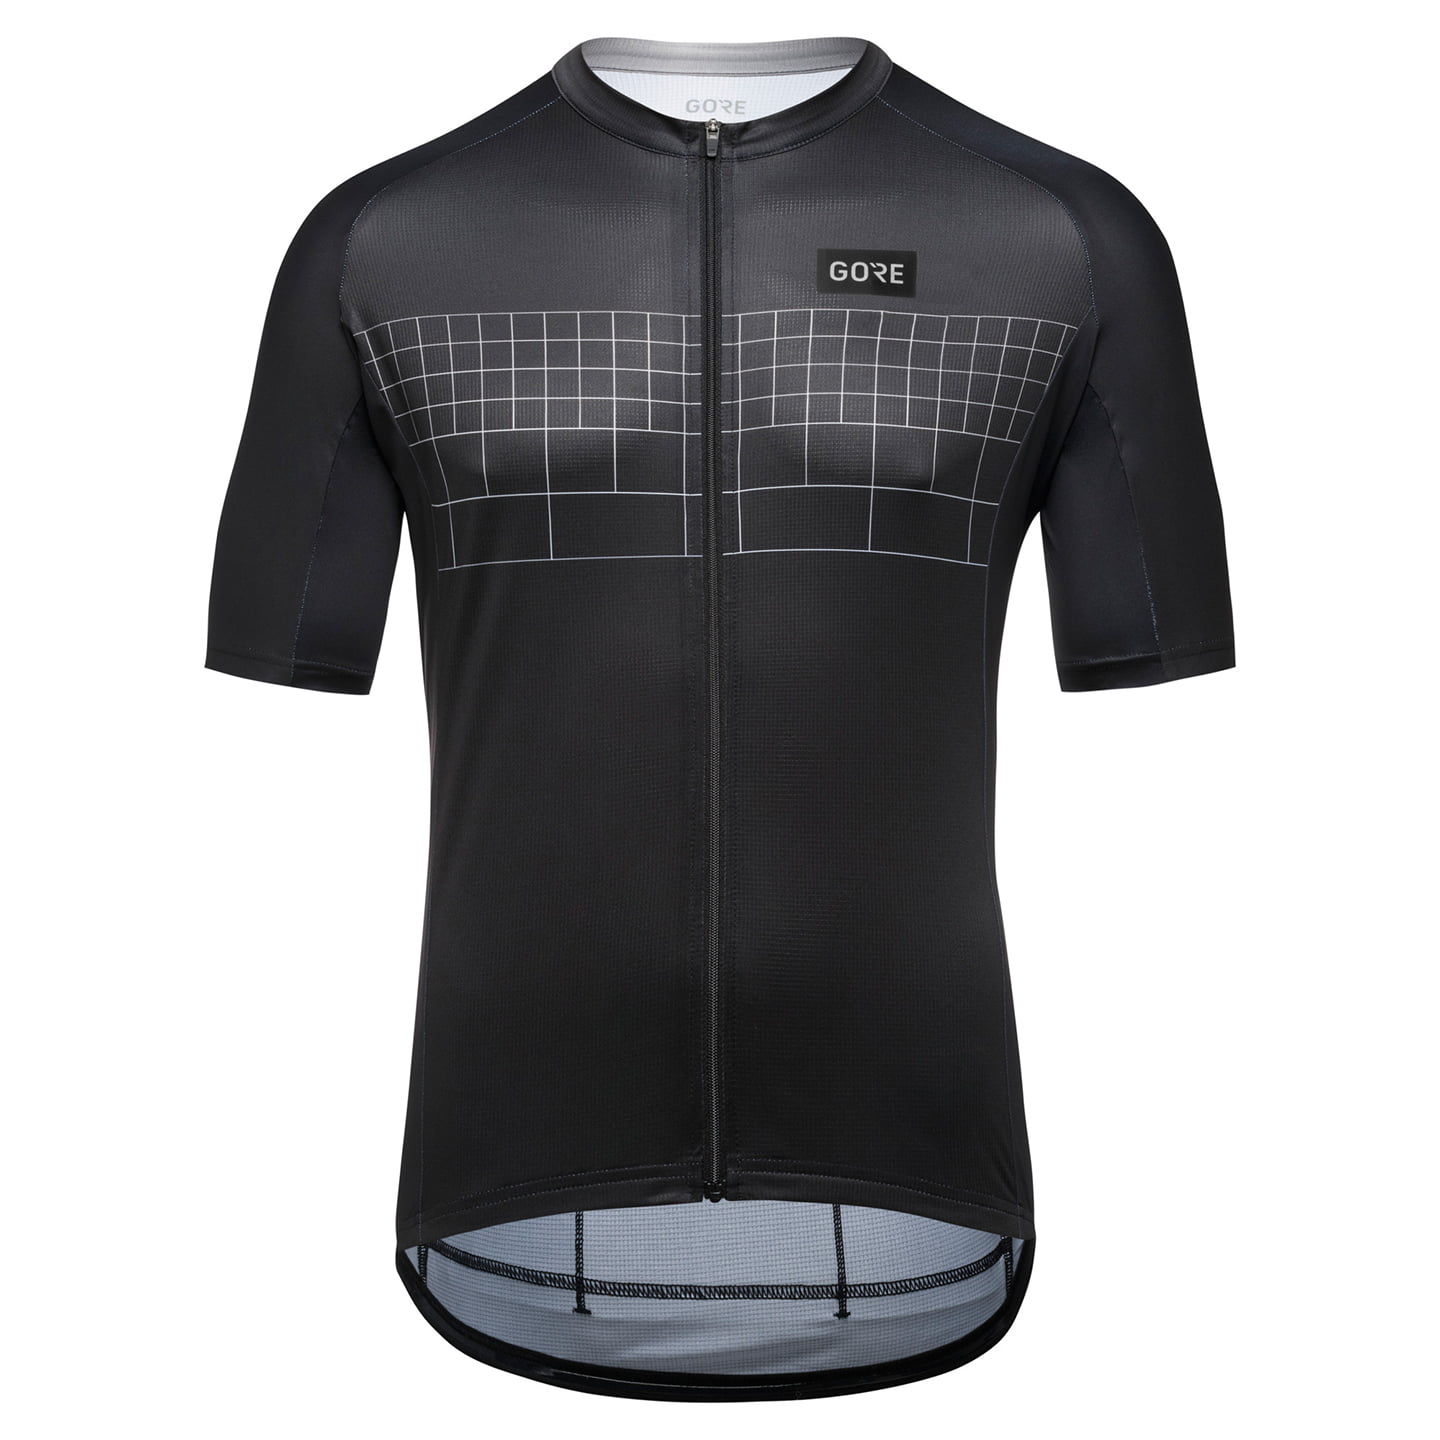 GORE WEAR Grid Fade 2.0 Short Sleeve Jersey Short Sleeve Jersey, for men, size XL, Cycling jersey, Cycle clothing